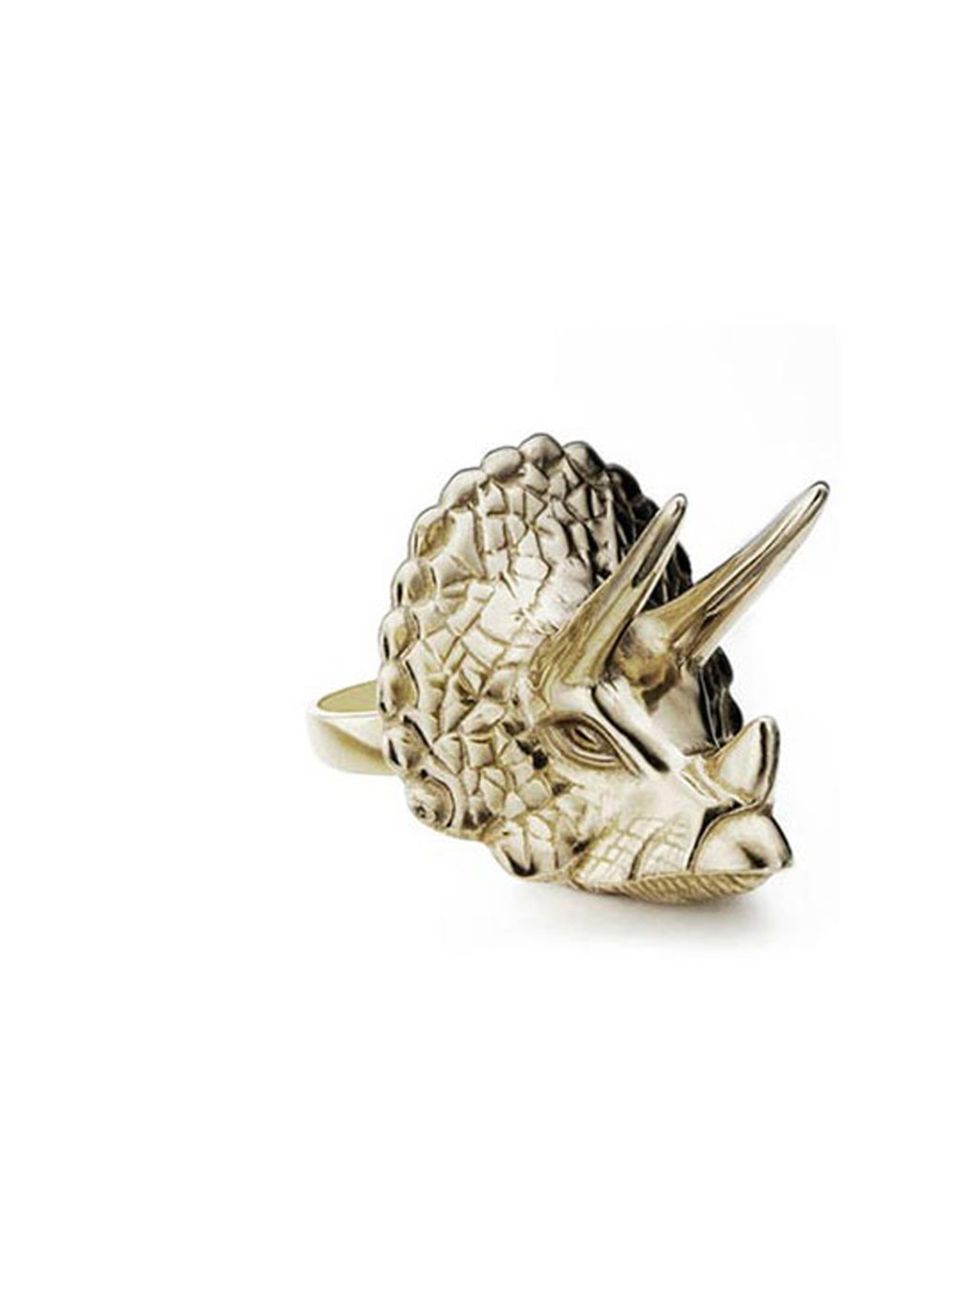 <p>Emma Franklin Triceratops Ring, £435, at <a href="http://www.emmafranklin.net/">www.emmafranklin.net</a></p>